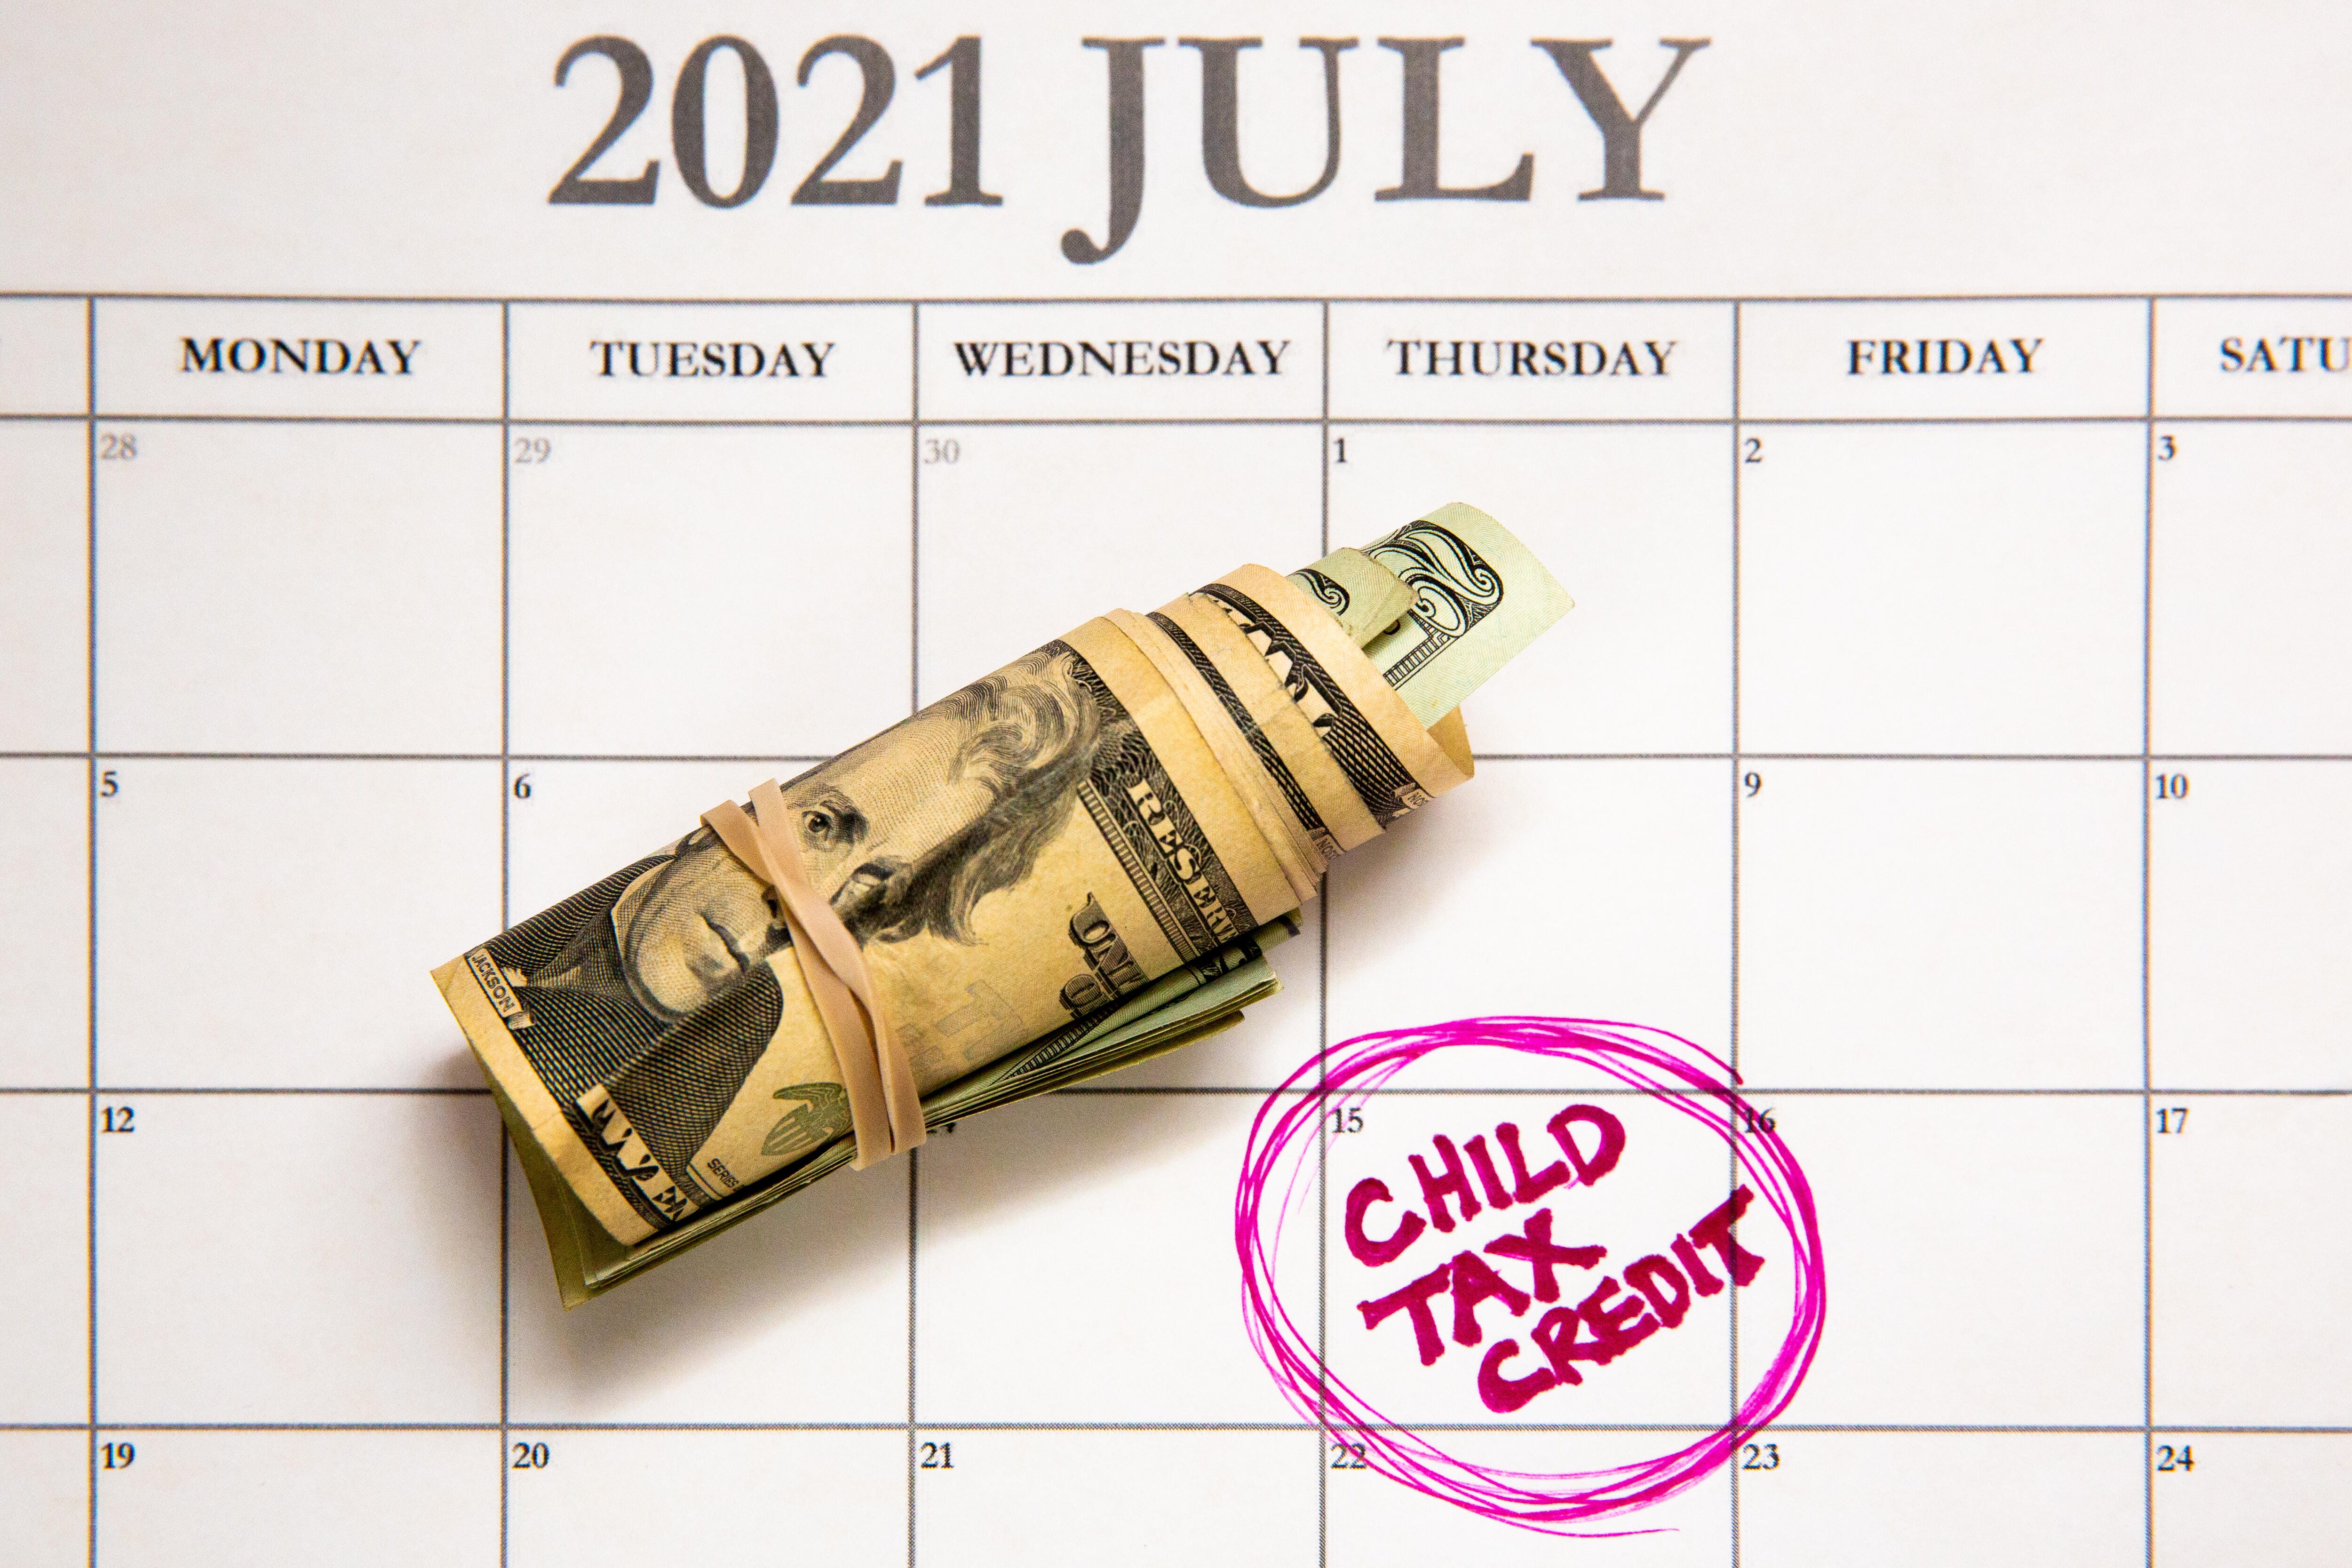 cash-money-stimulus-child-tax-credit-2021-piggy-bank-savings-july-15-payment-calendar-10